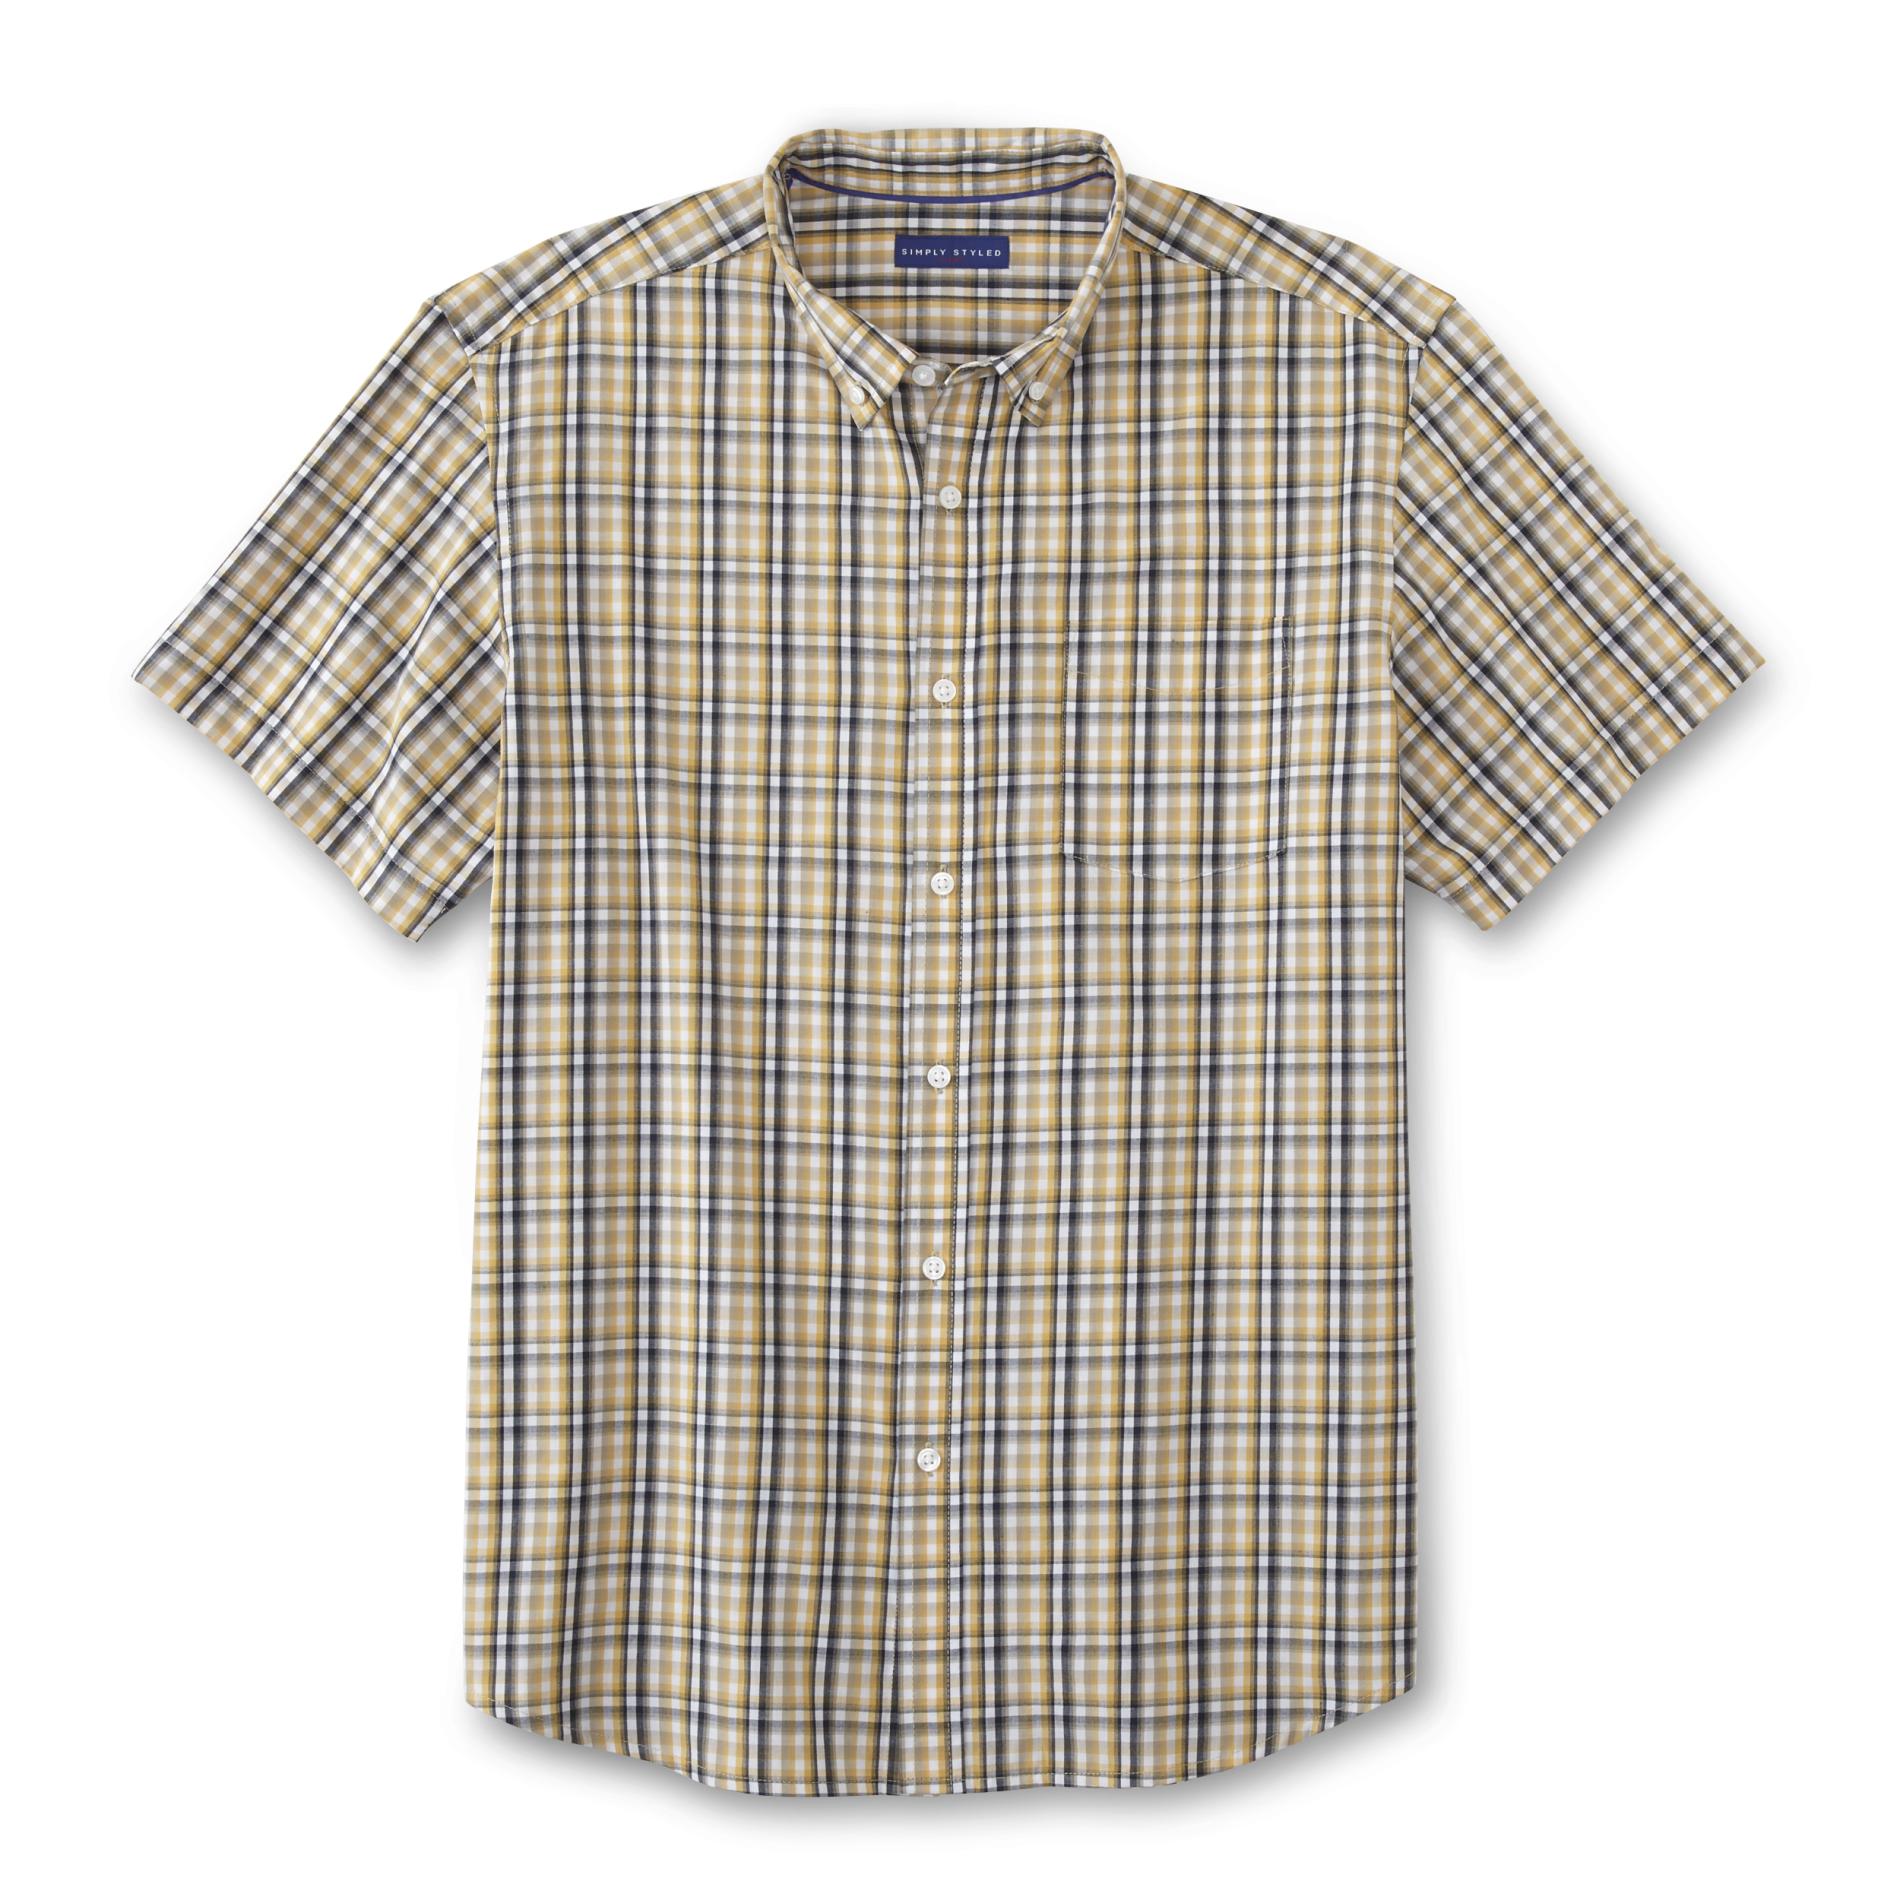 Simply Styled Men's Short-Sleeve Shirt - Plaid